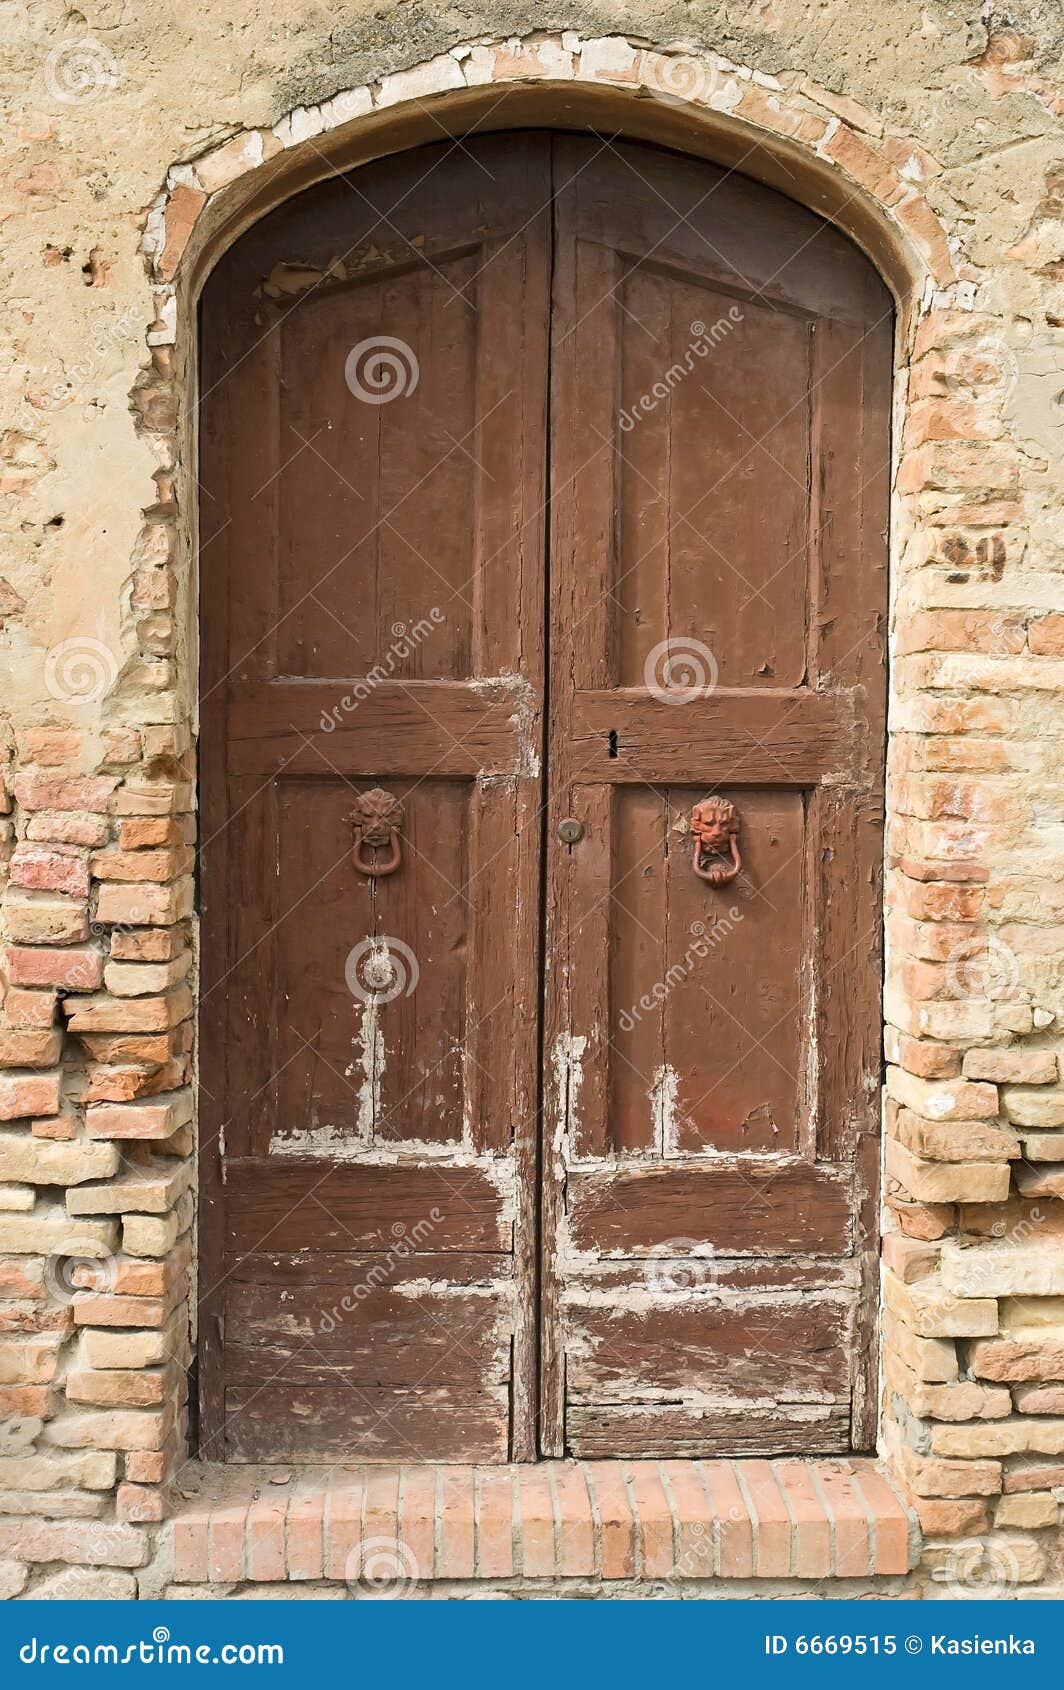 old obsolete vintage door